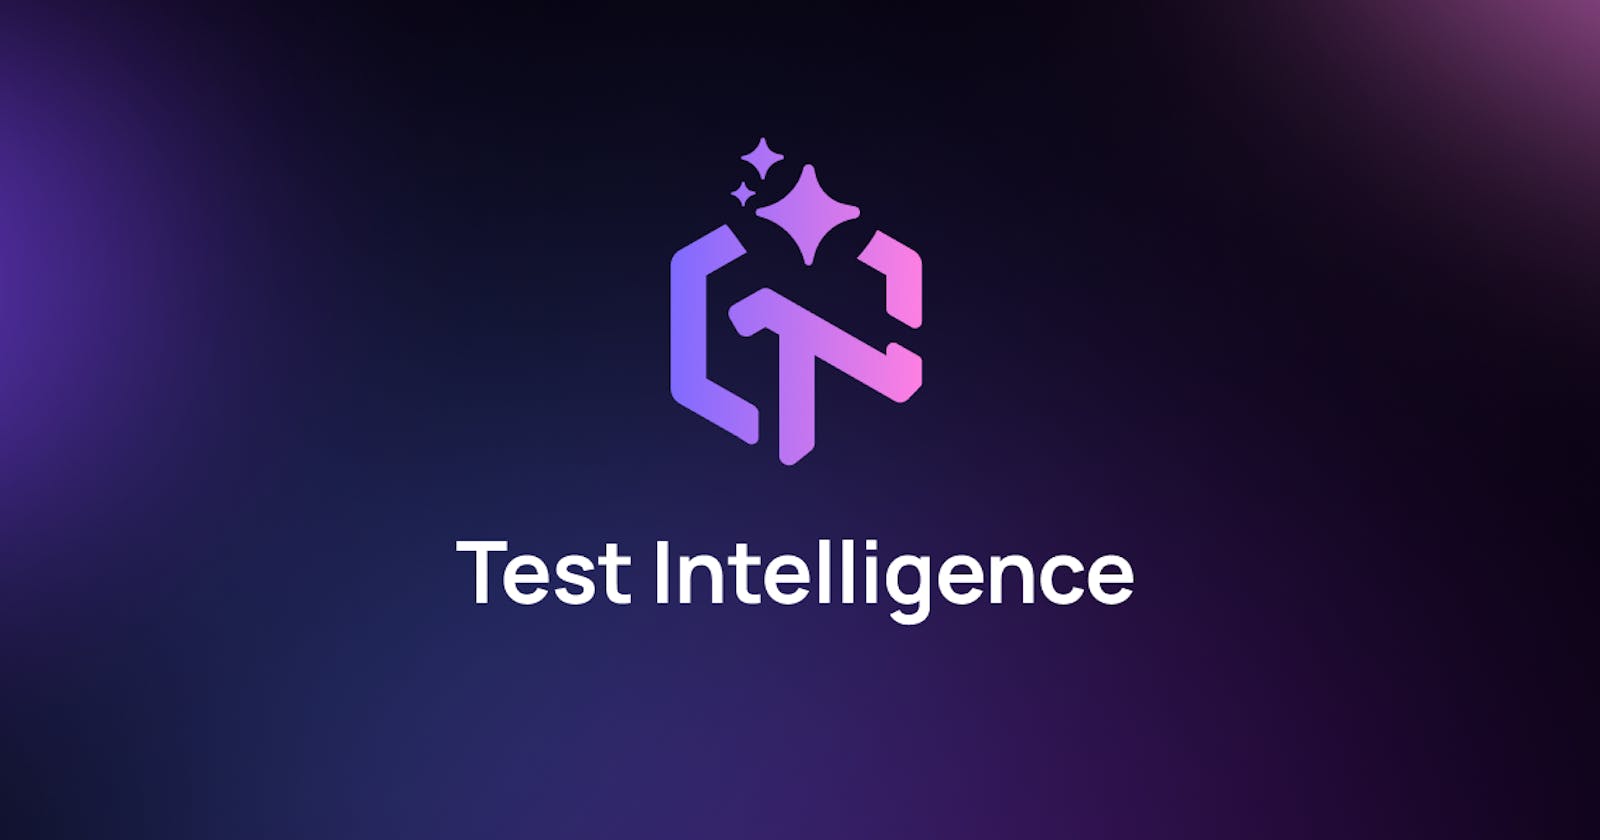 A Quantum Shift in Software Testing: LambdaTest’s AI Test Intelligence Platform